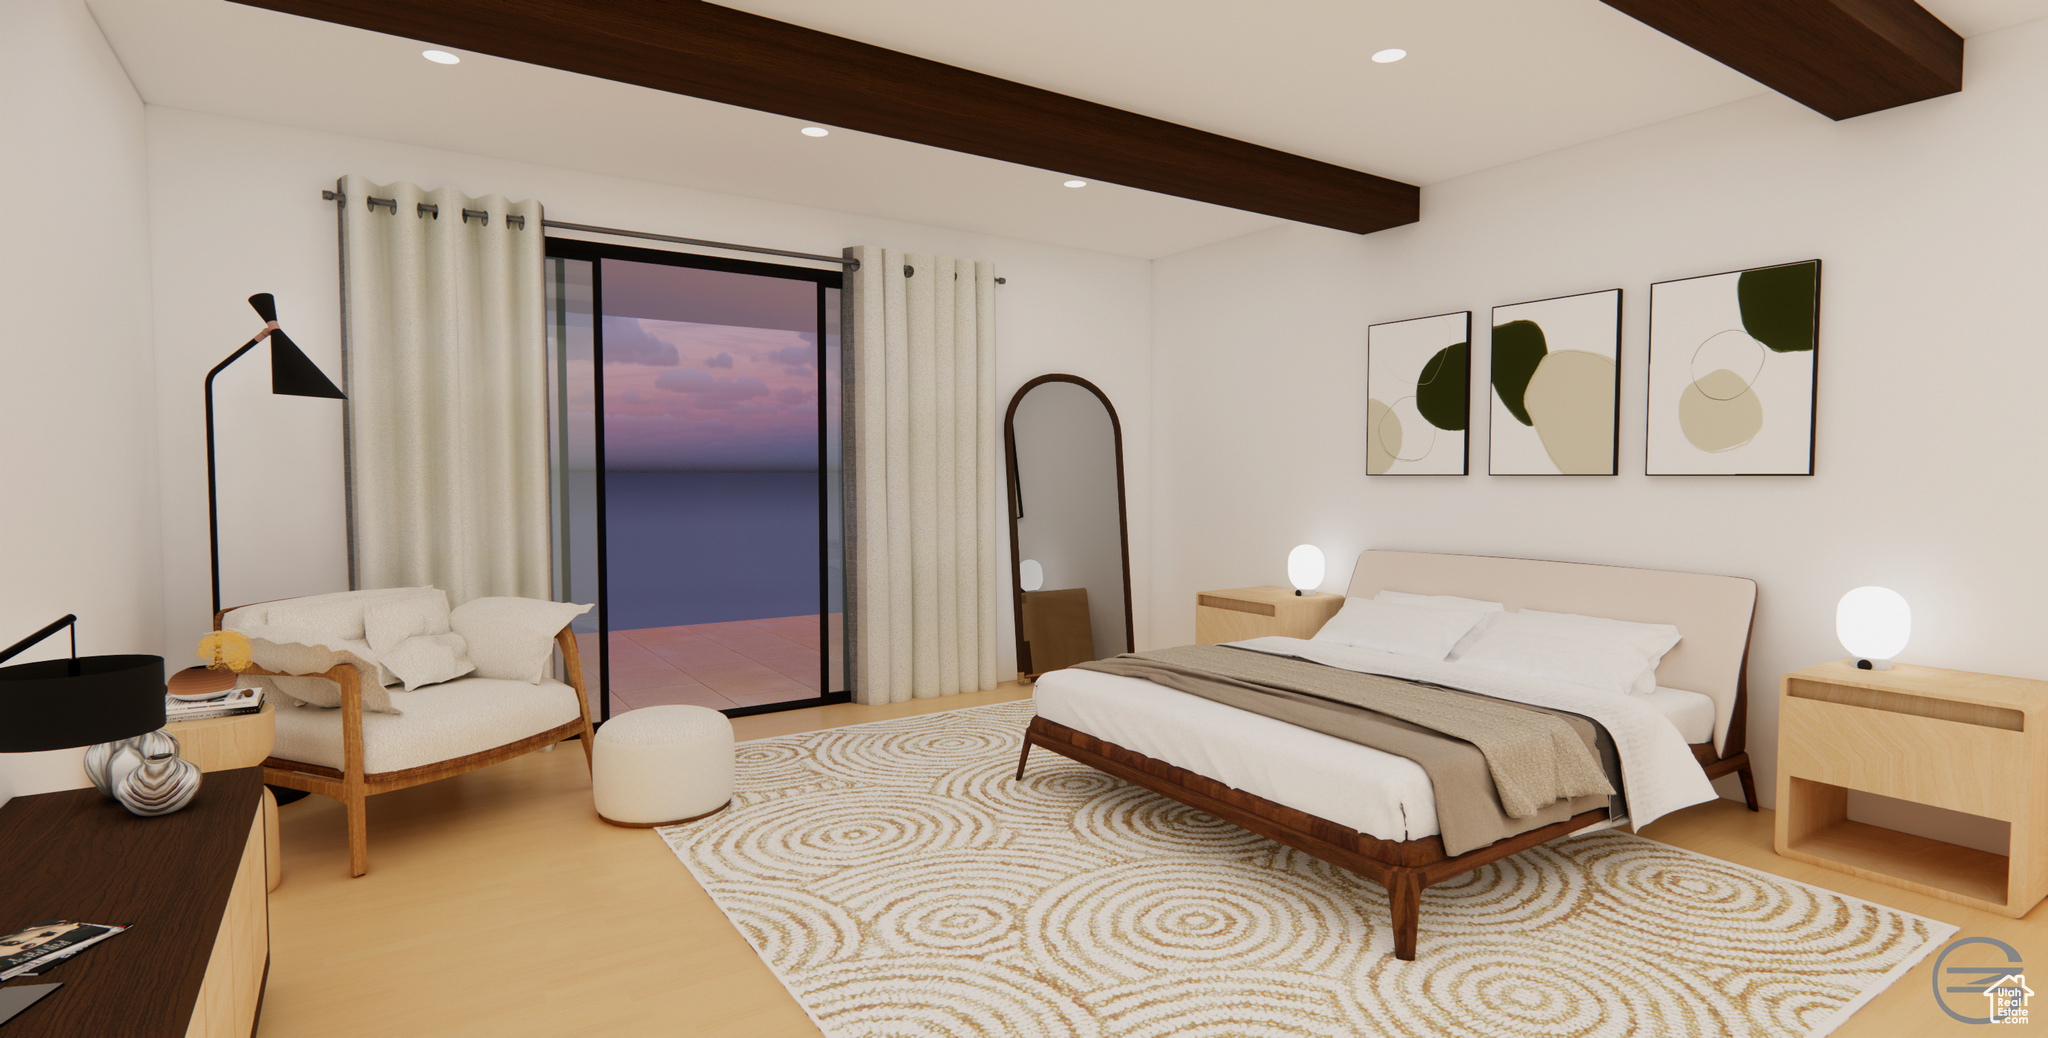 Bedroom featuring beamed ceiling and light hardwood / wood-style floors - RENDERING